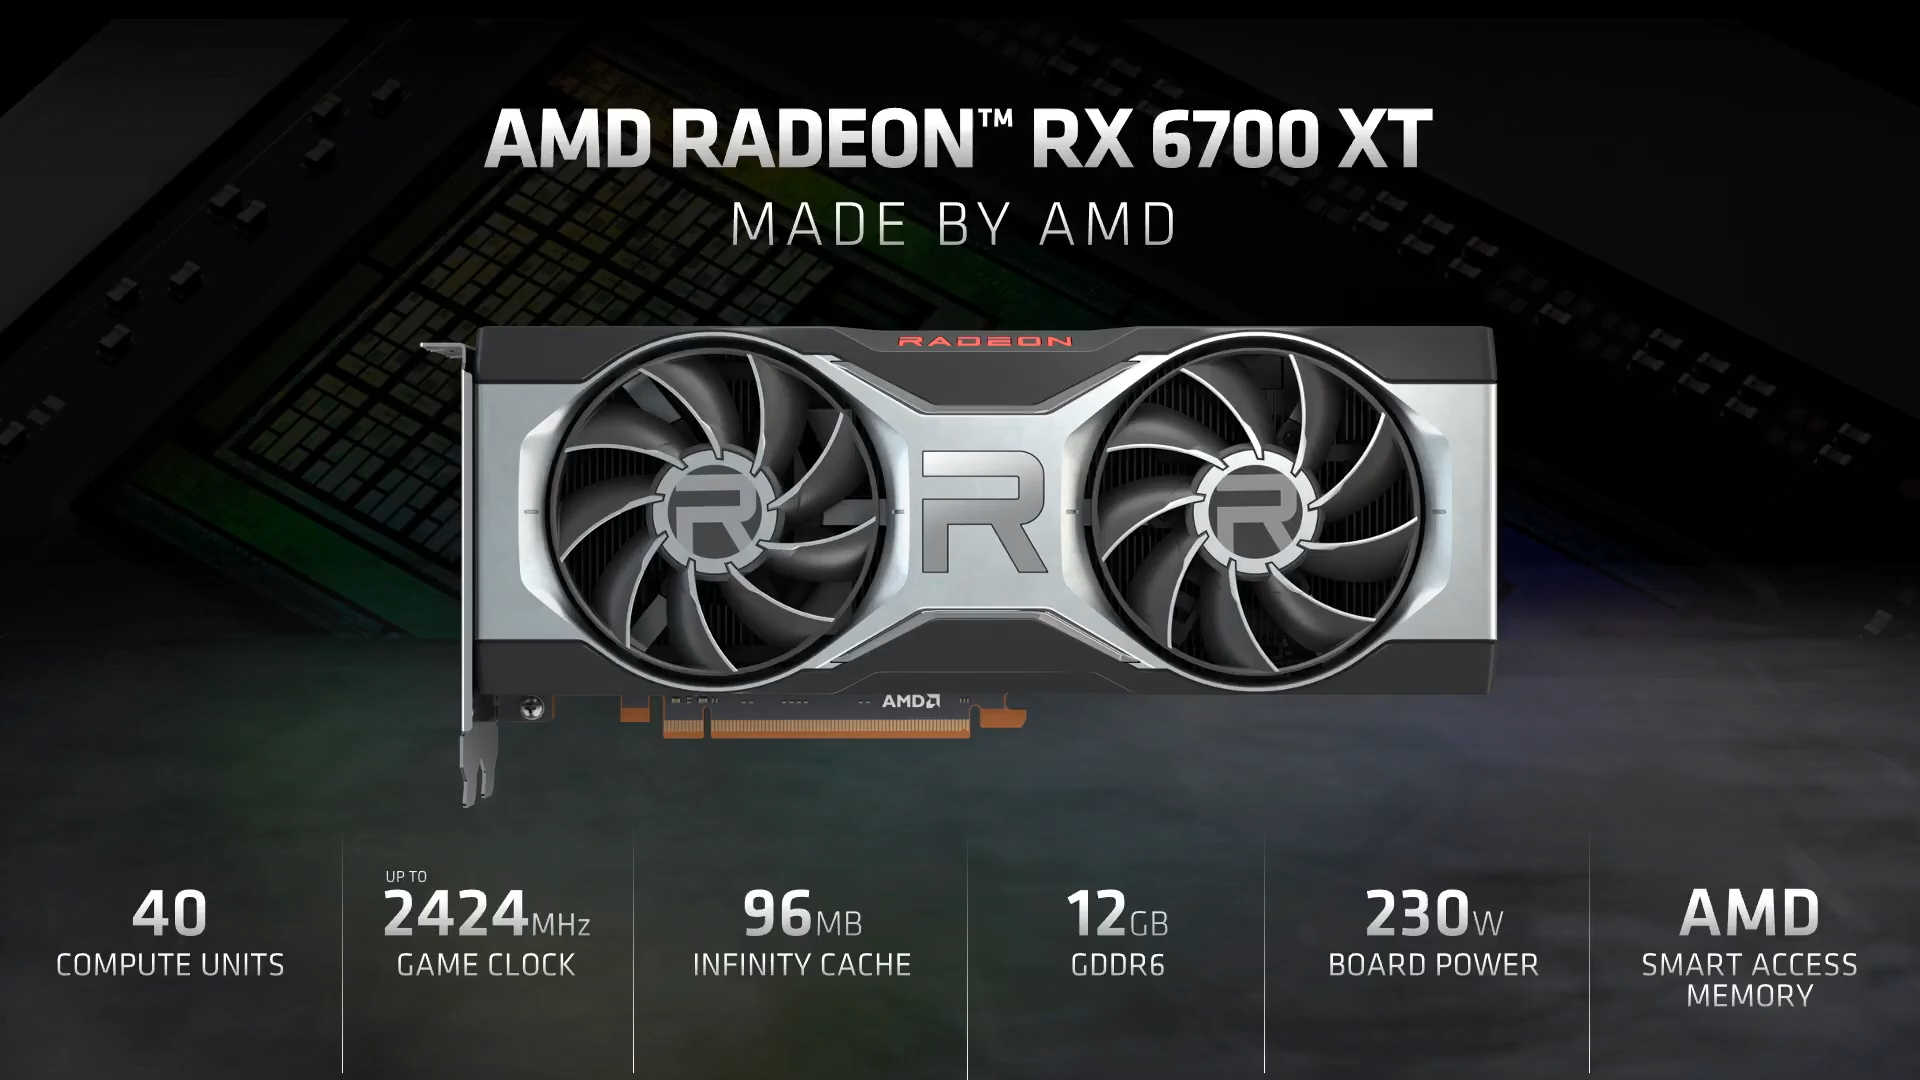 amd radeon rx 6700 xt specs AMD ประกาศเปิดตัวการ์ดจอ AMD Radeon RX 6700 XT ในราคา 479 USD พร้อมวางจำหน่ายในวันที่ 18 มีนาคมที่จะถึงนี้